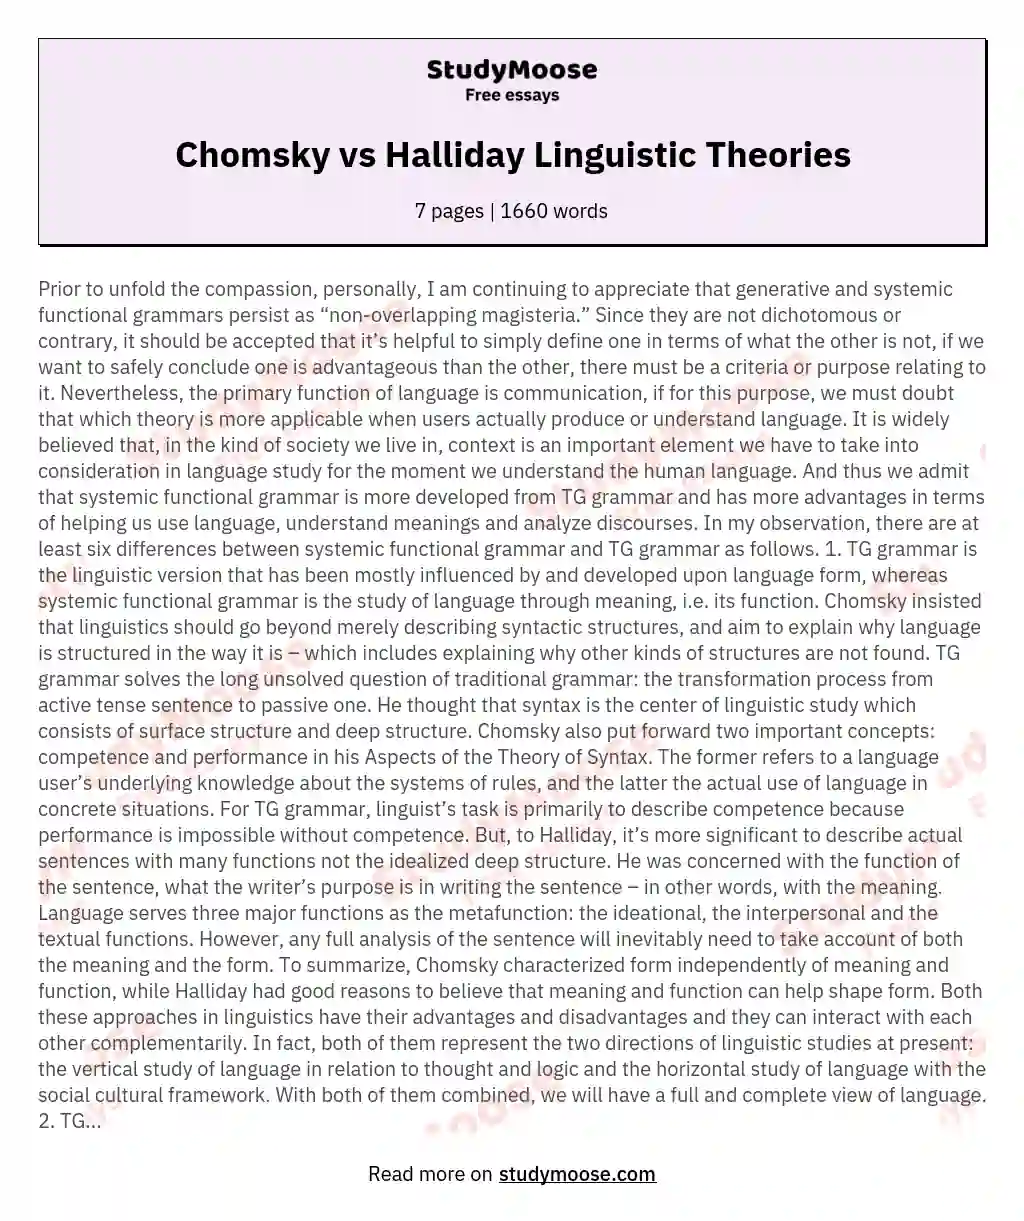 Chomsky vs Halliday Linguistic Theories essay